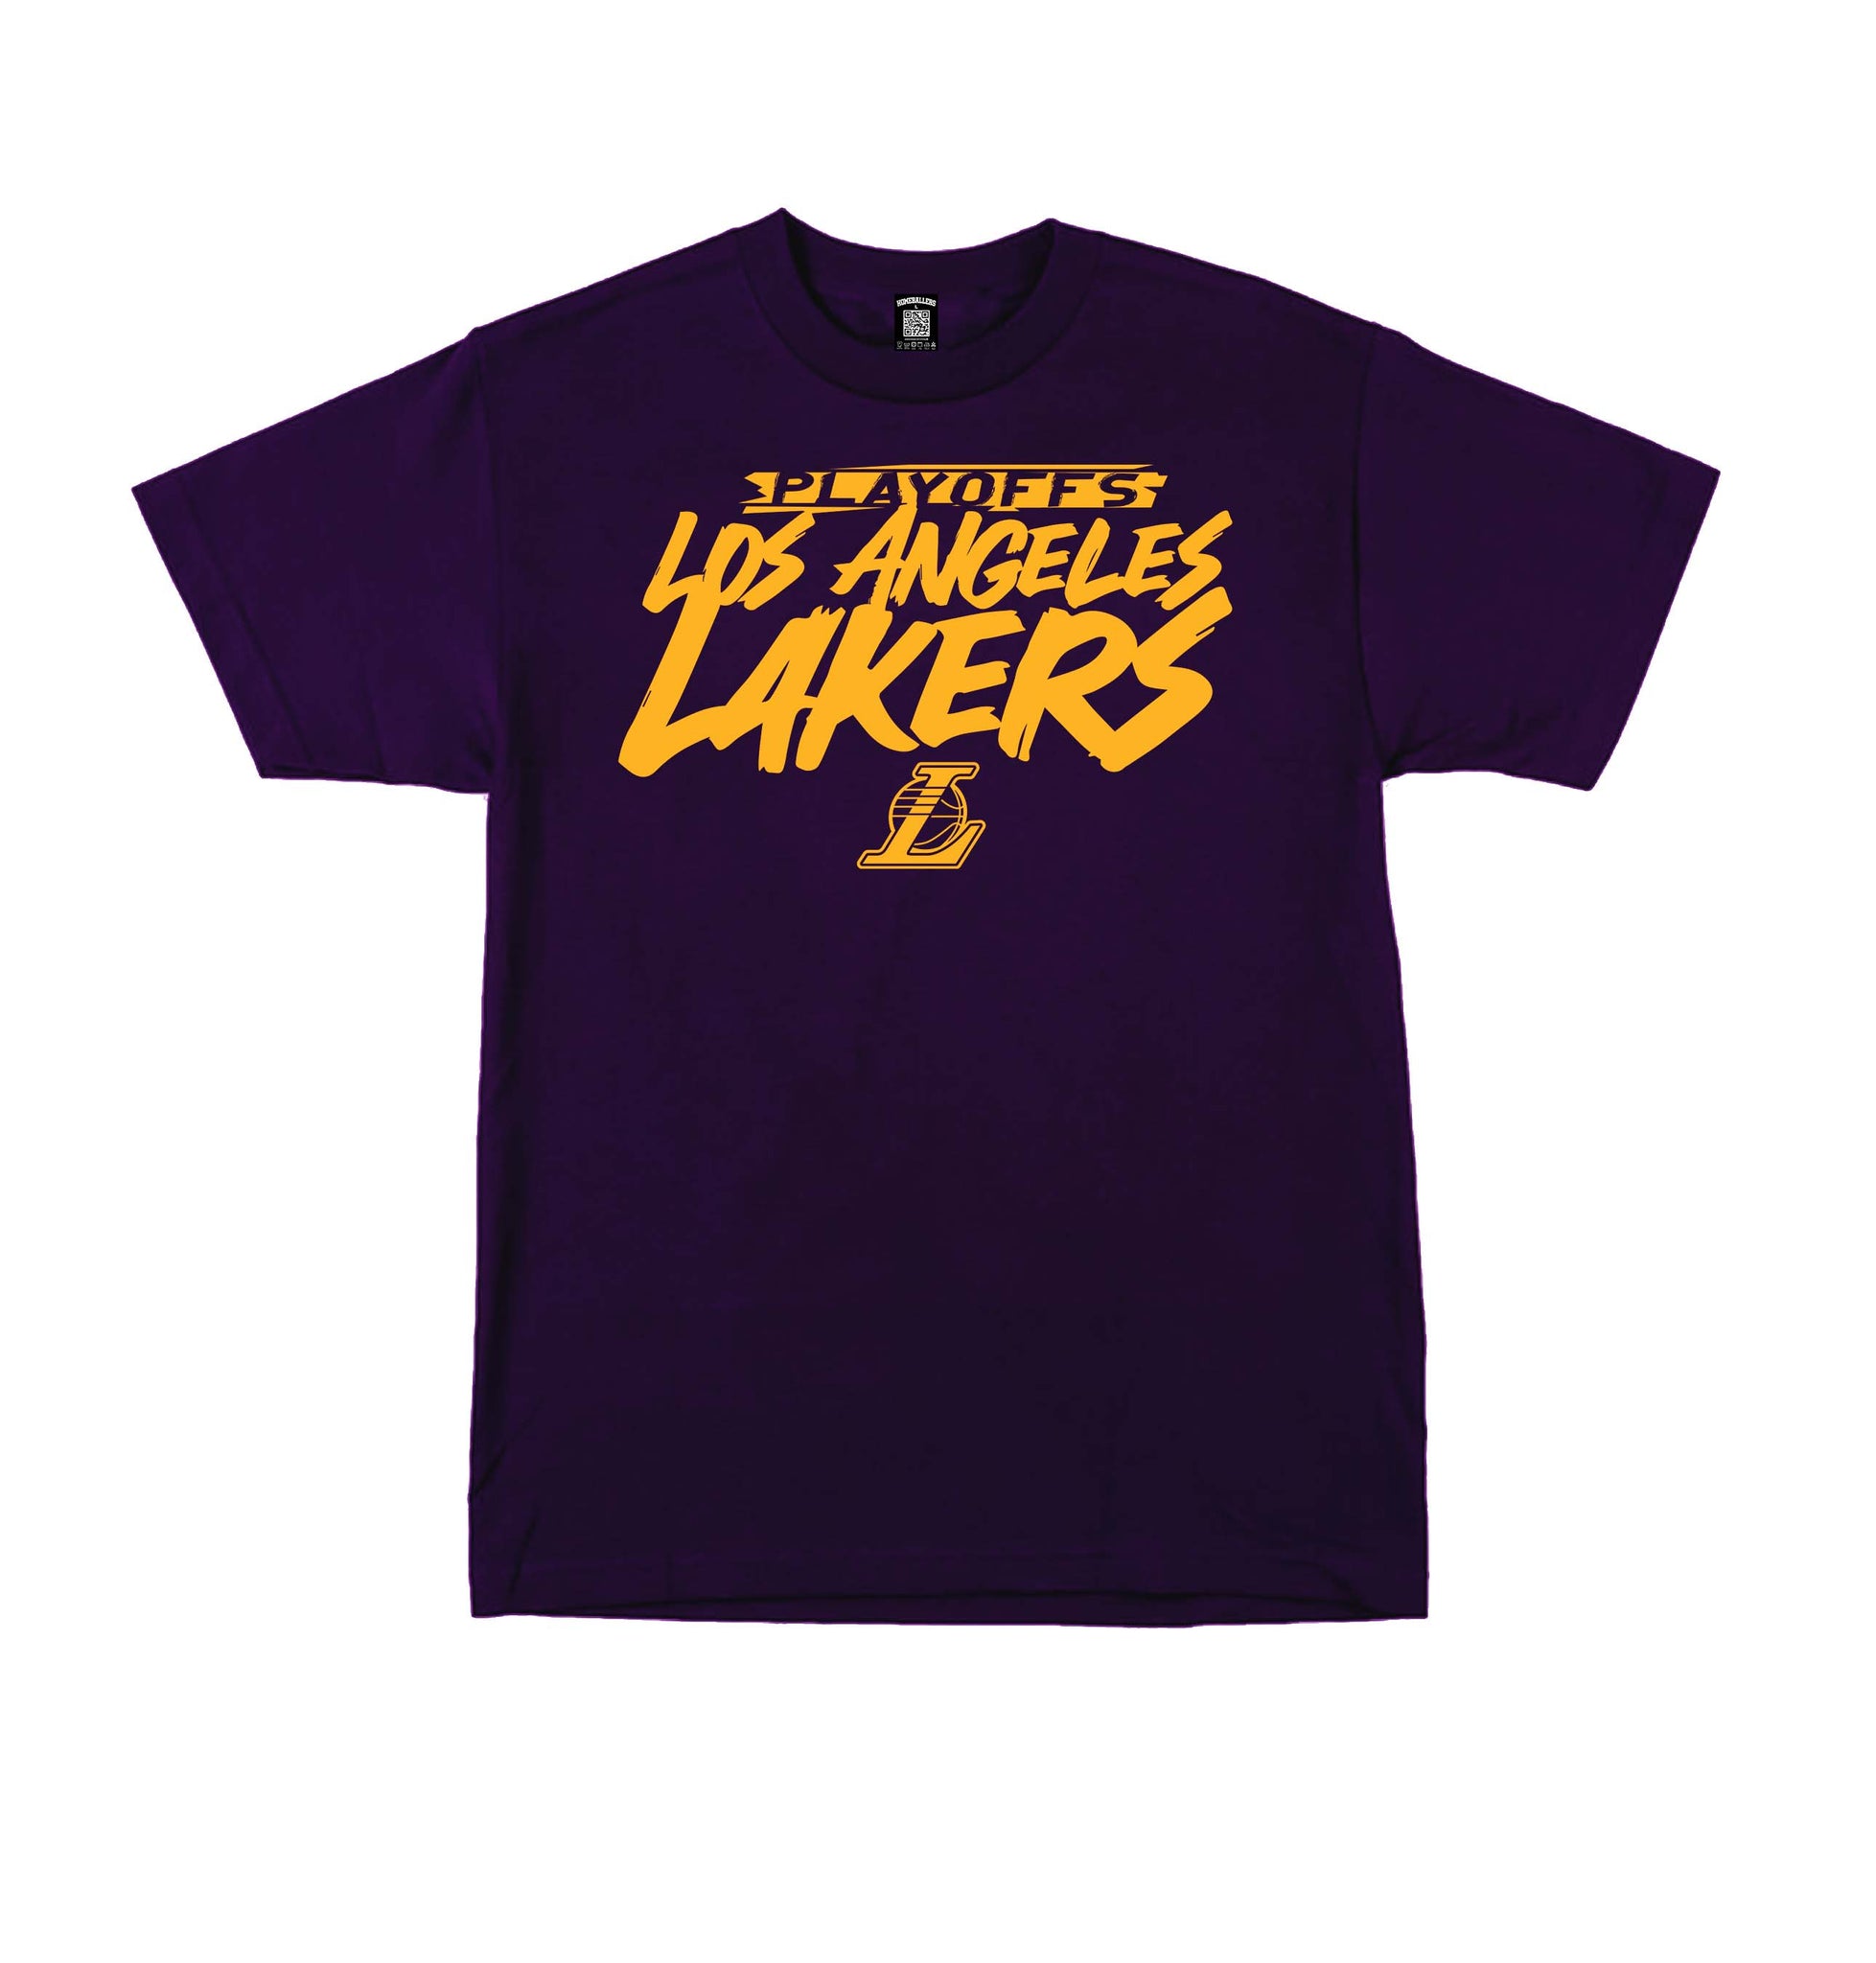 Los Angeles Lakers Summer With Baby Groot Basketball Association 2023  Hawaiian Shirt - Freedomdesign